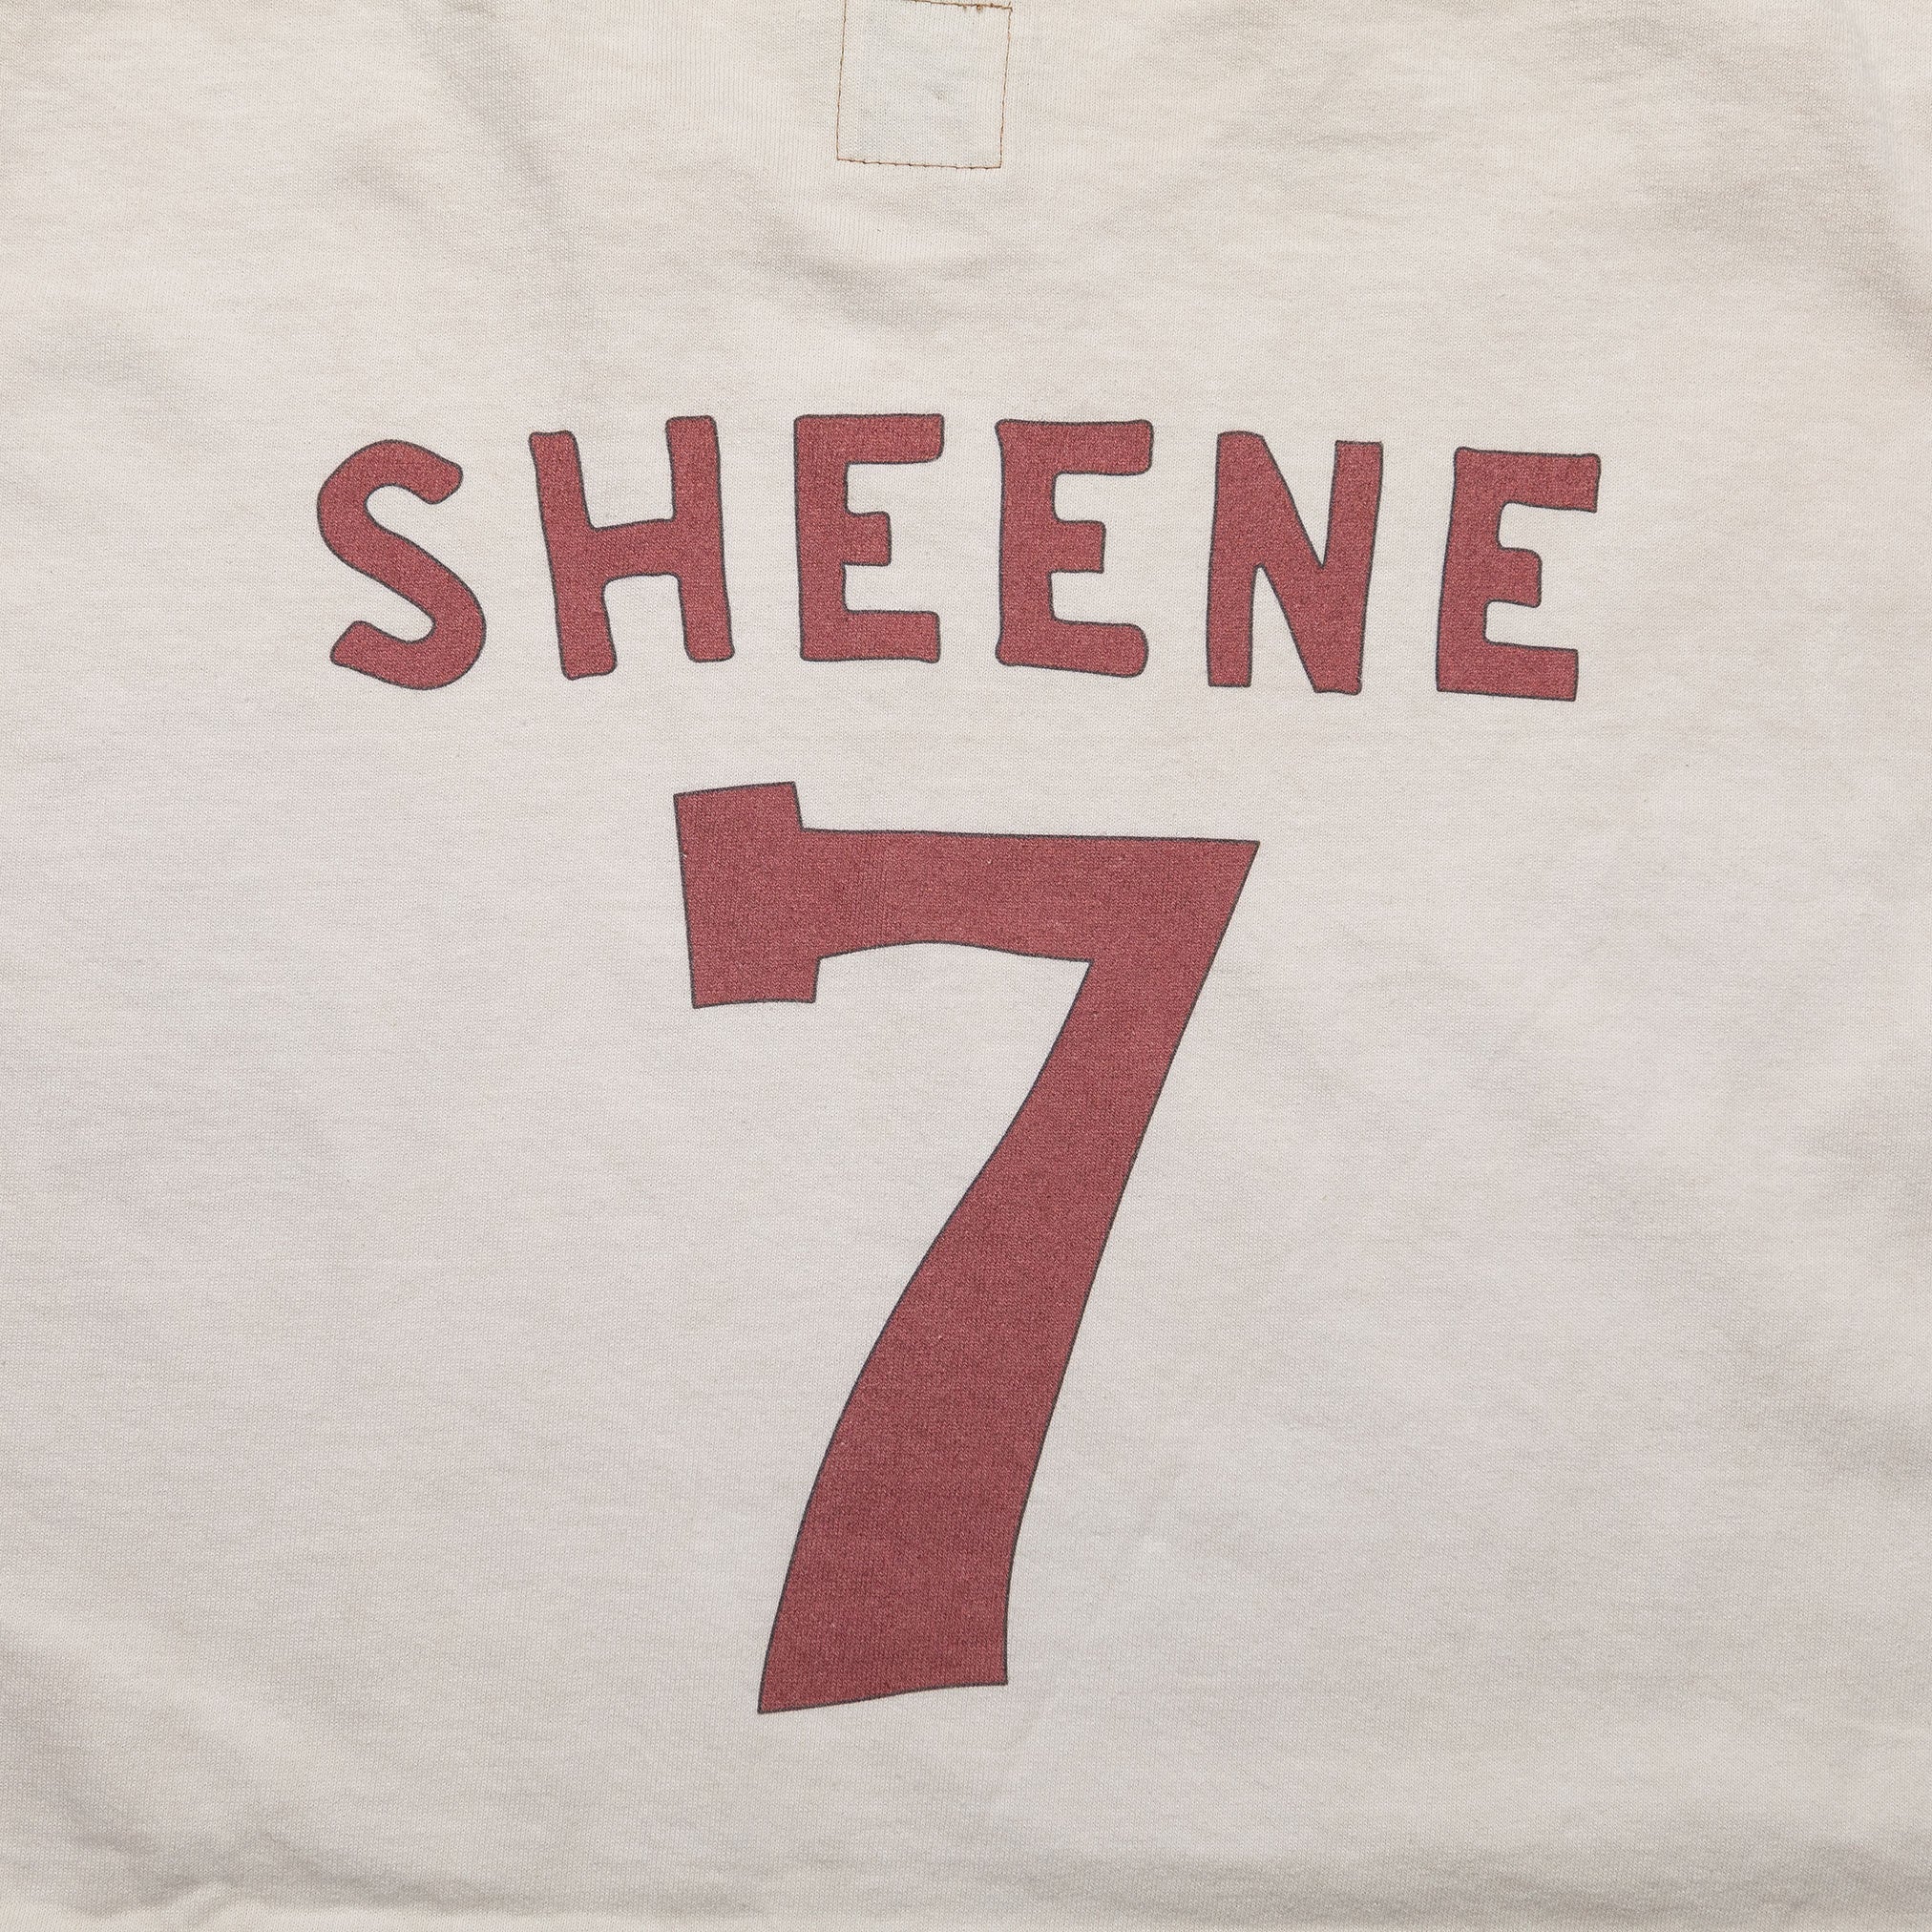 Sheene 7 Tee